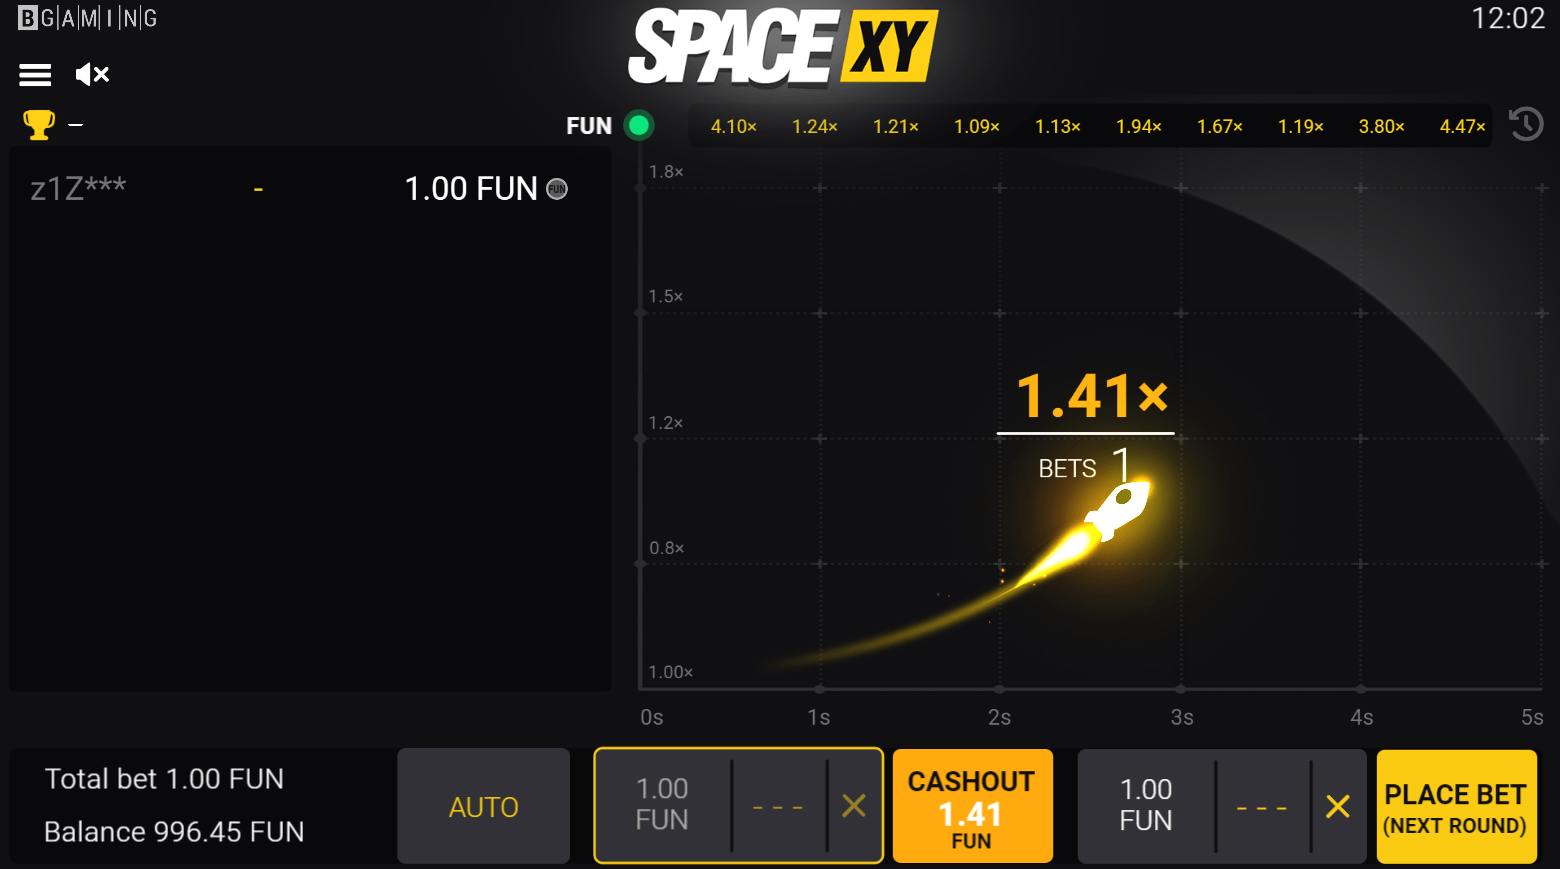 Space XY pesa